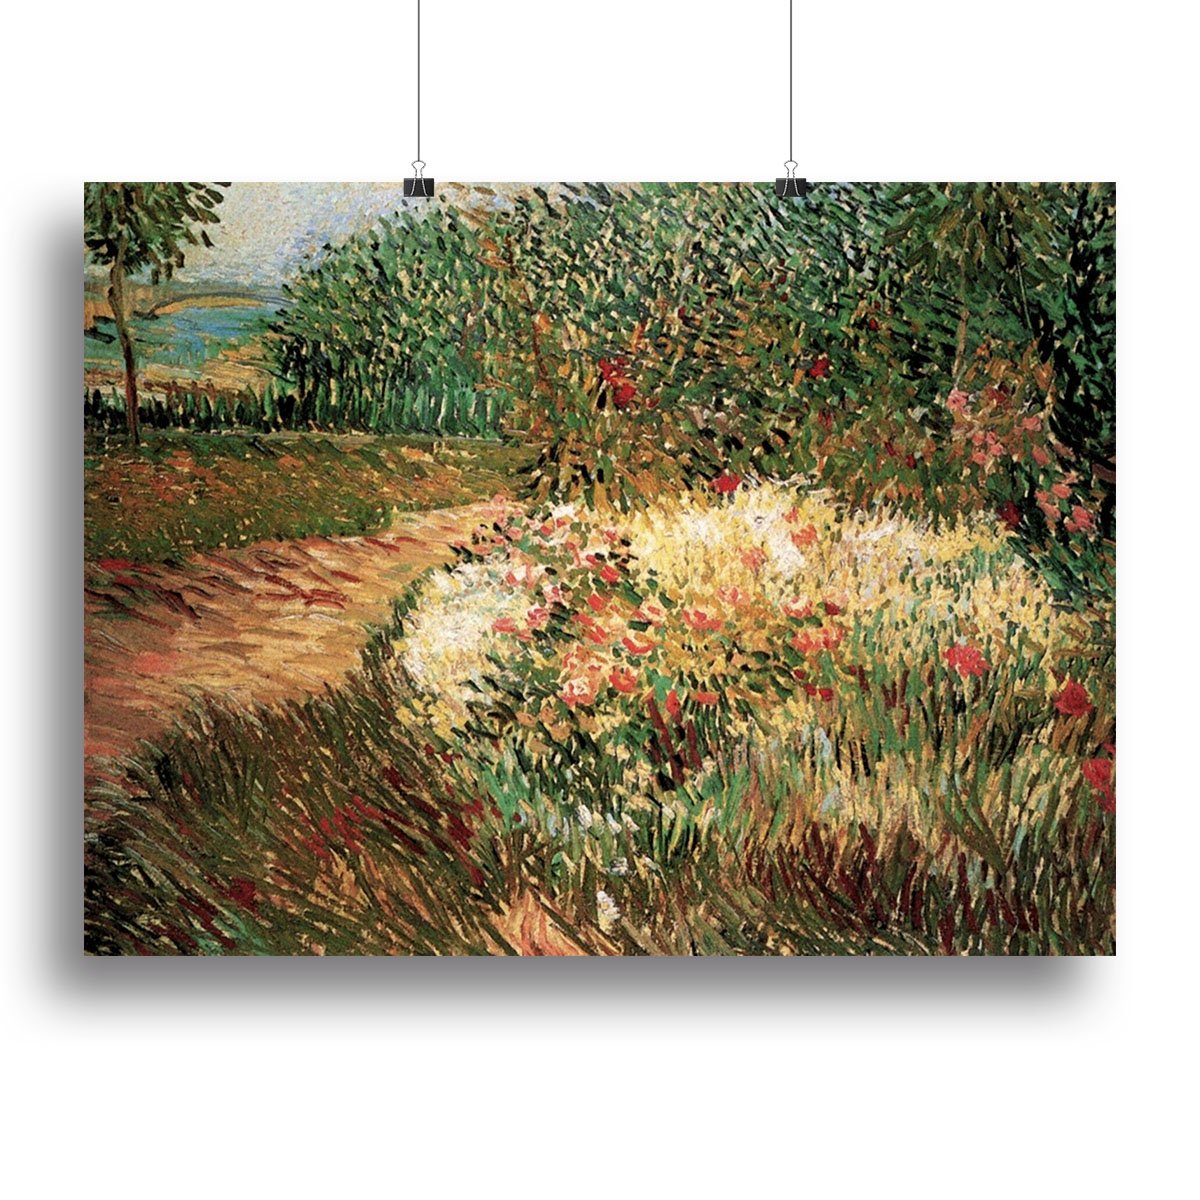 Corner of Voyer d Argenson Park at Asnieres by Van Gogh Canvas Print or Poster